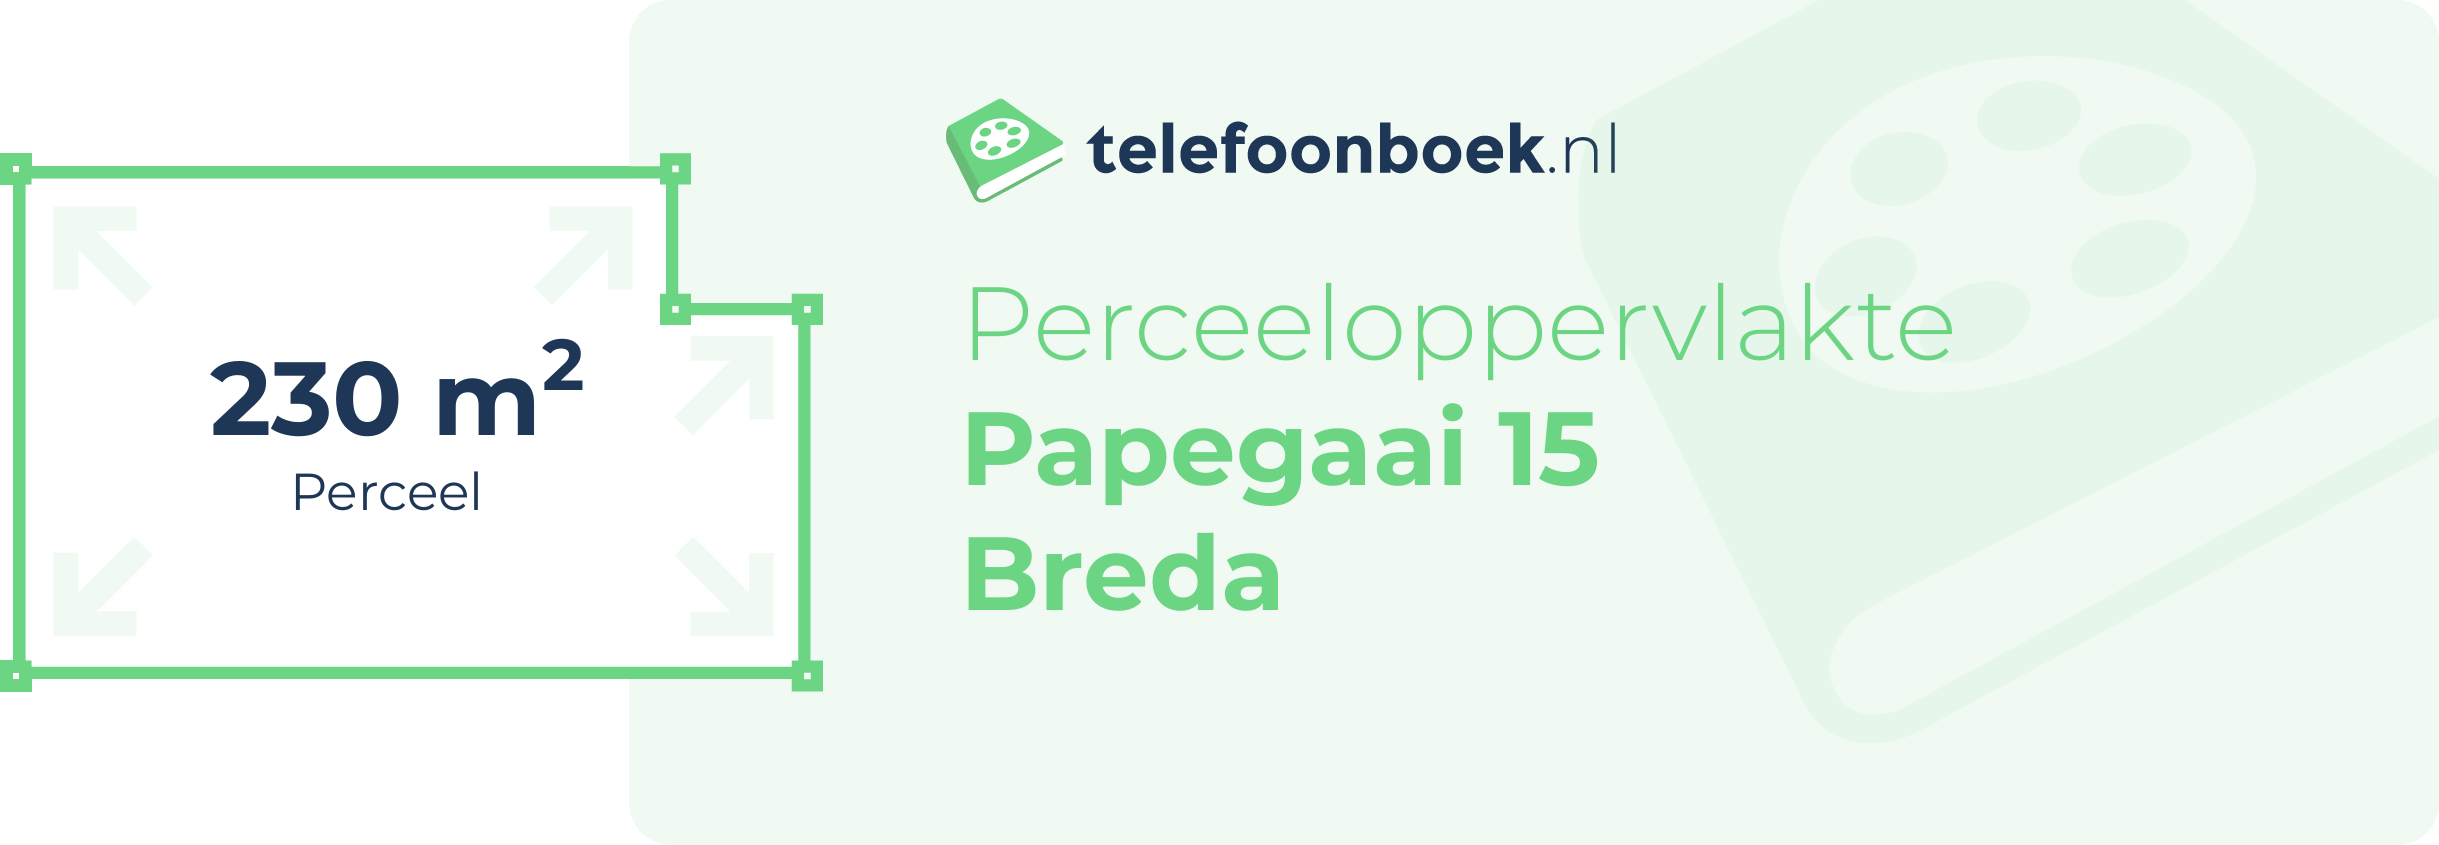 Perceeloppervlakte Papegaai 15 Breda